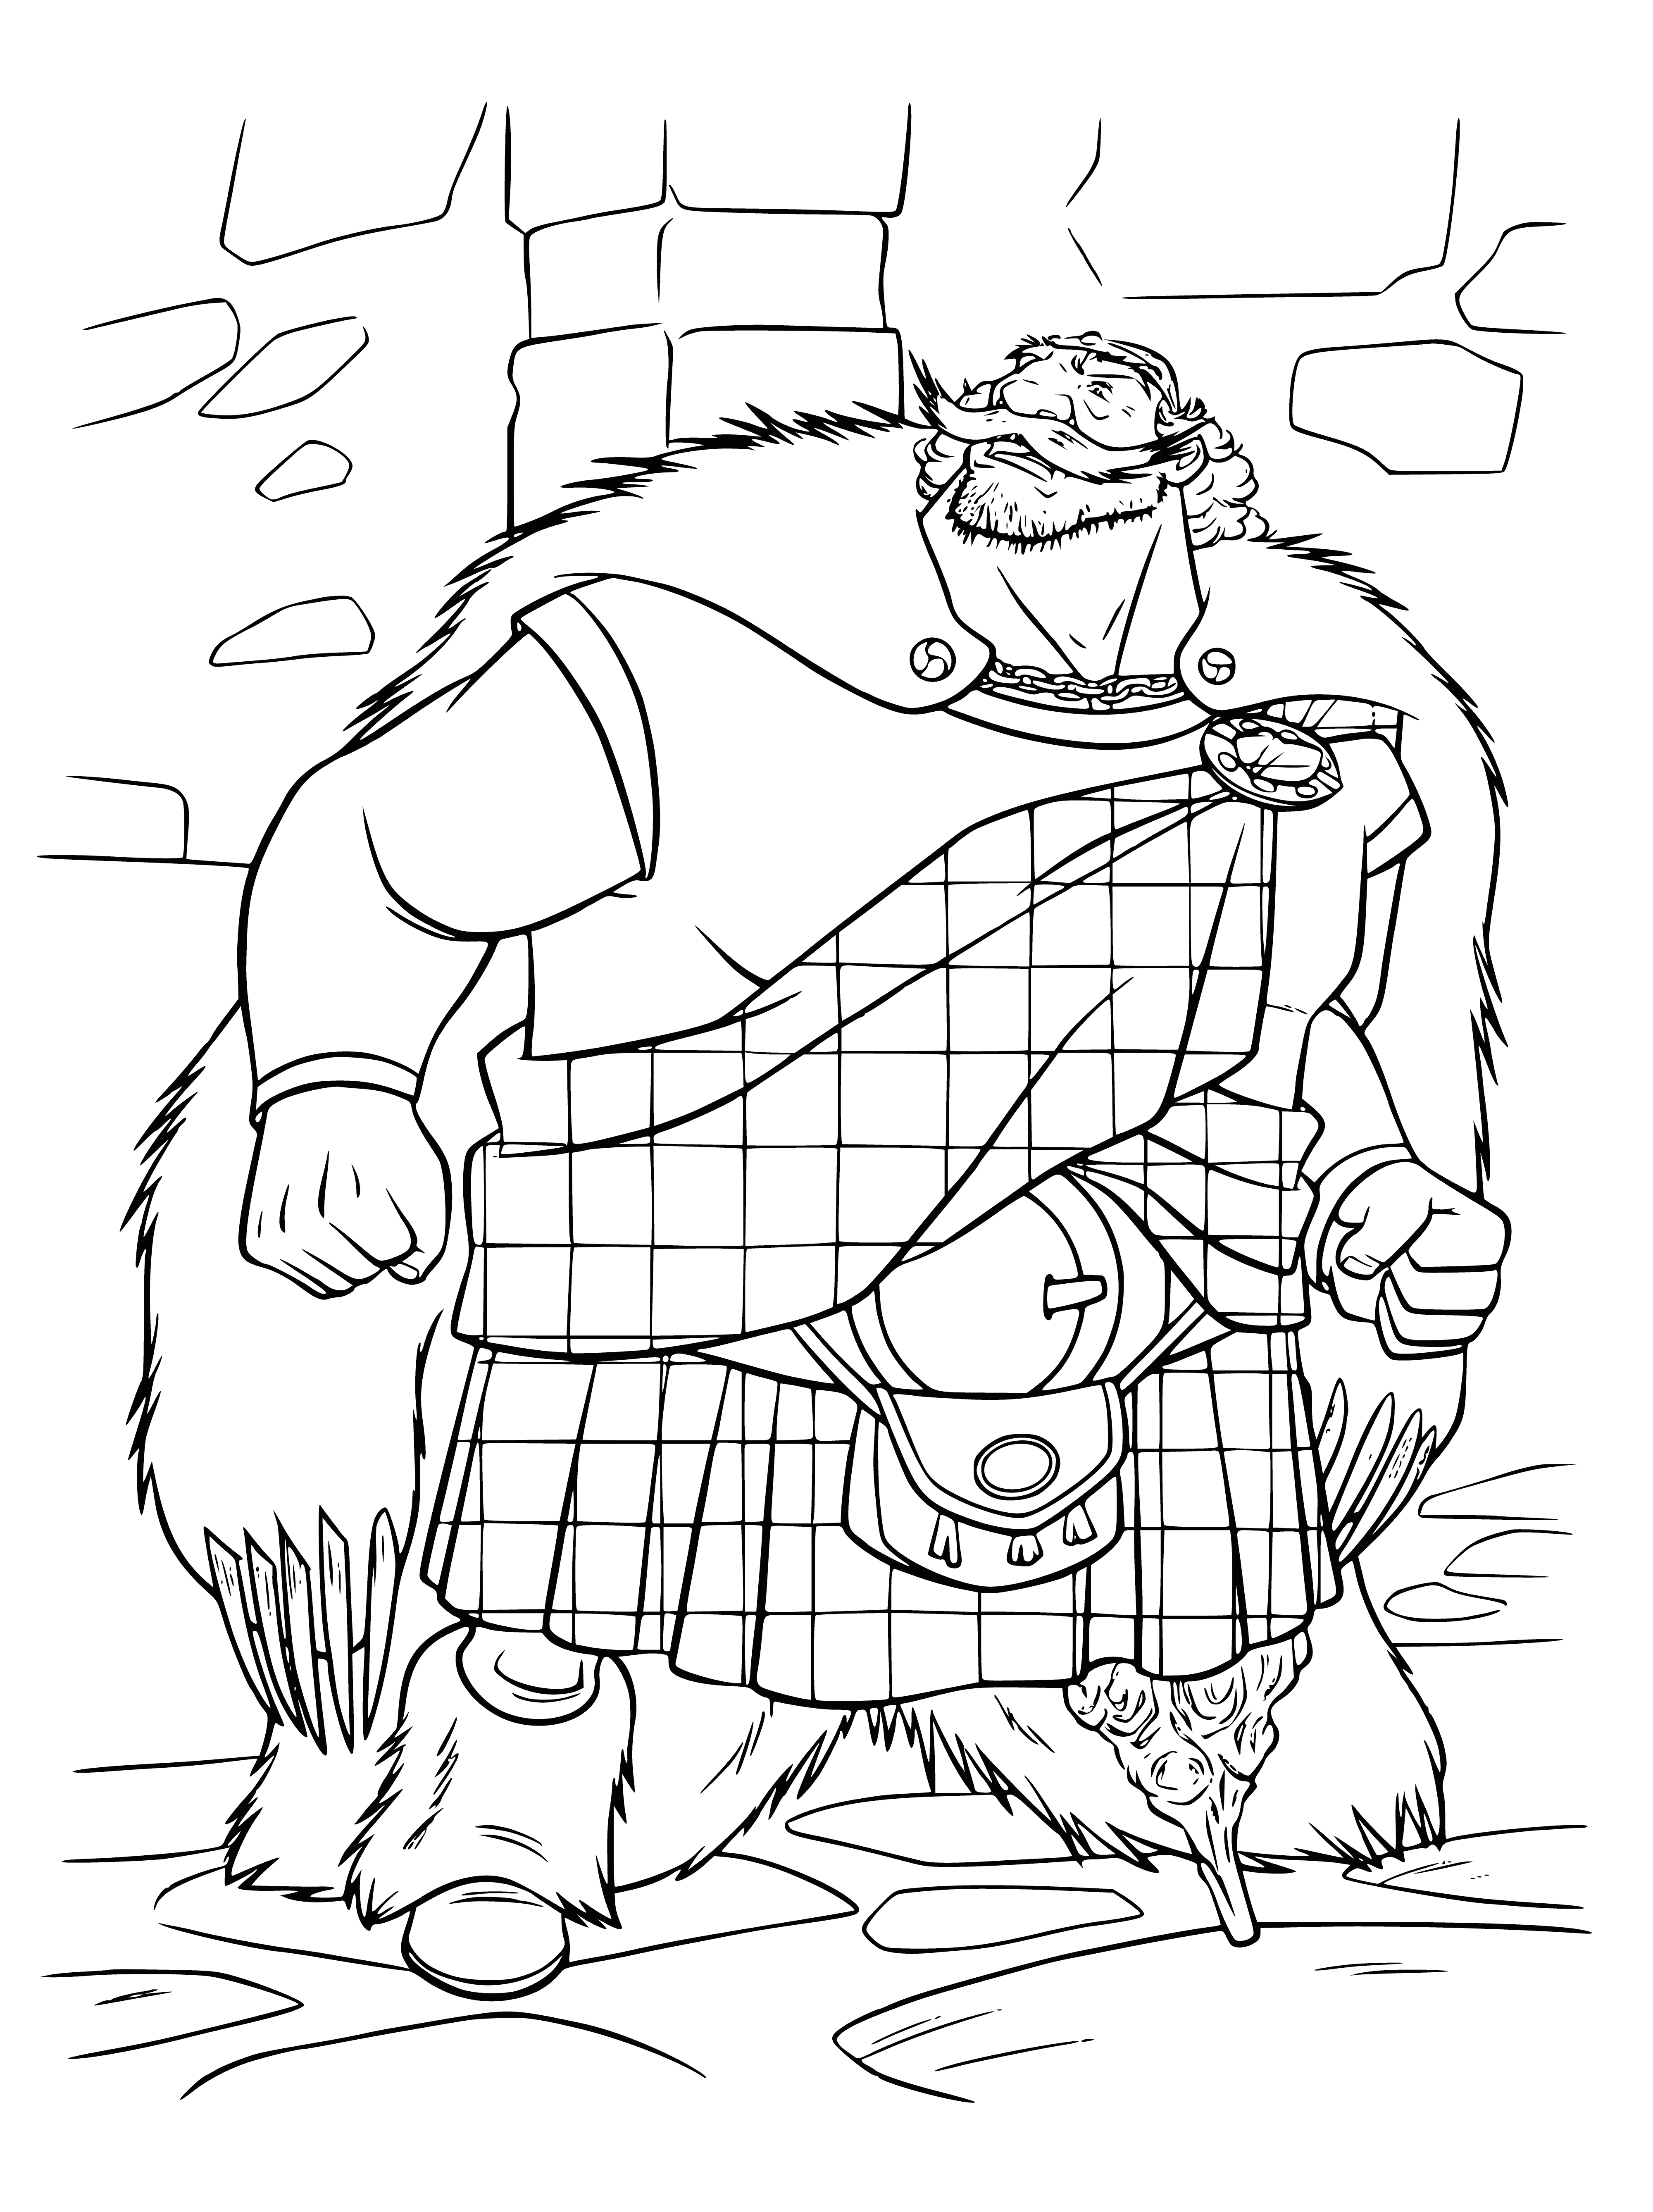 King Fergus coloring page